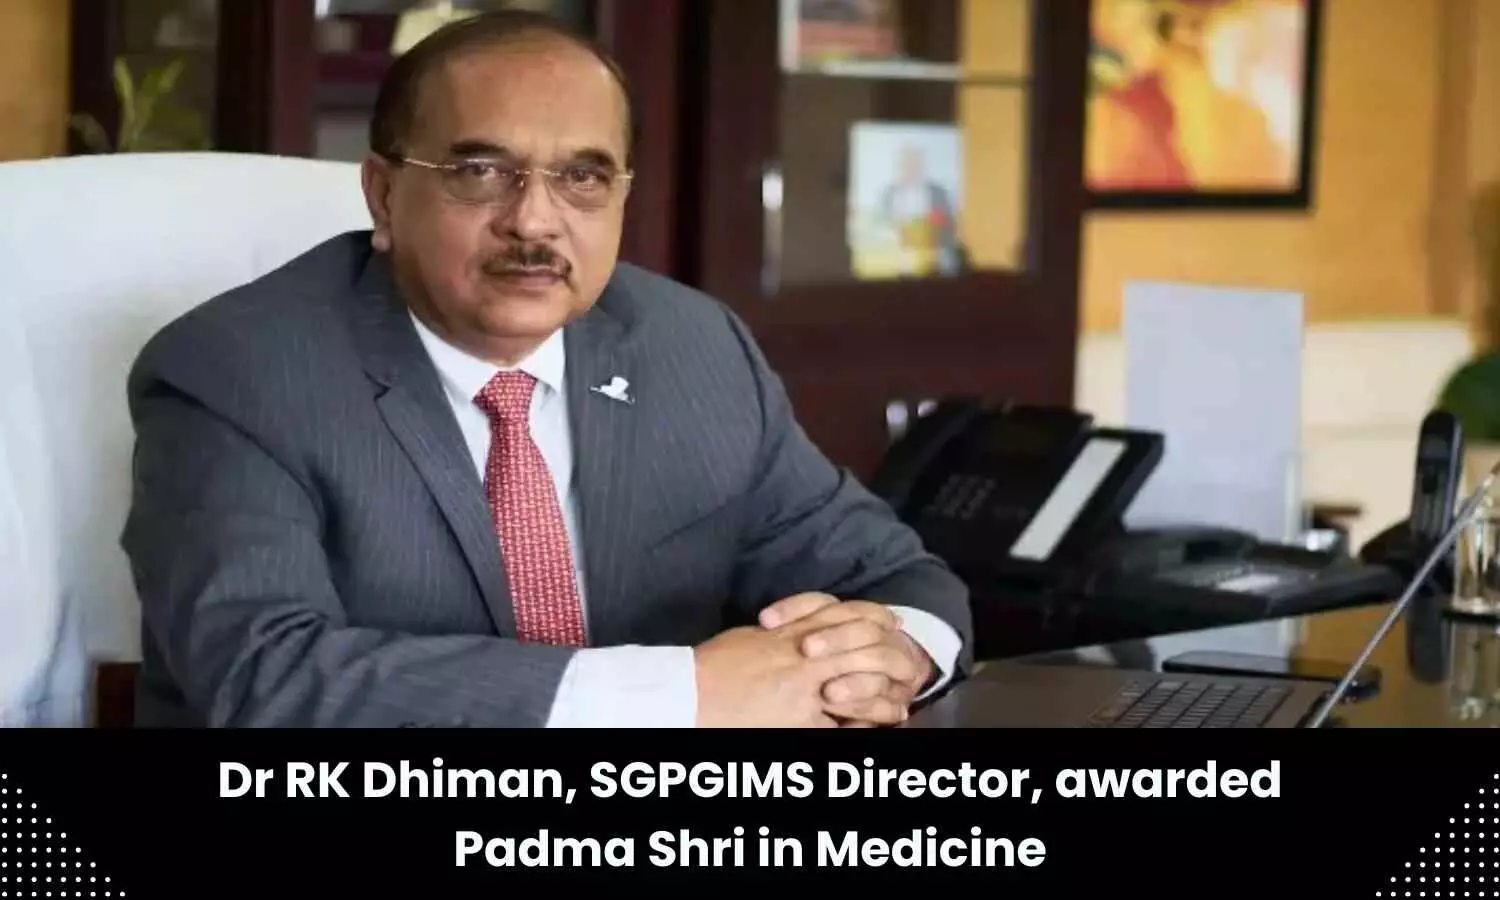 SGPGIMS Director receives Padma Shri in Medicine